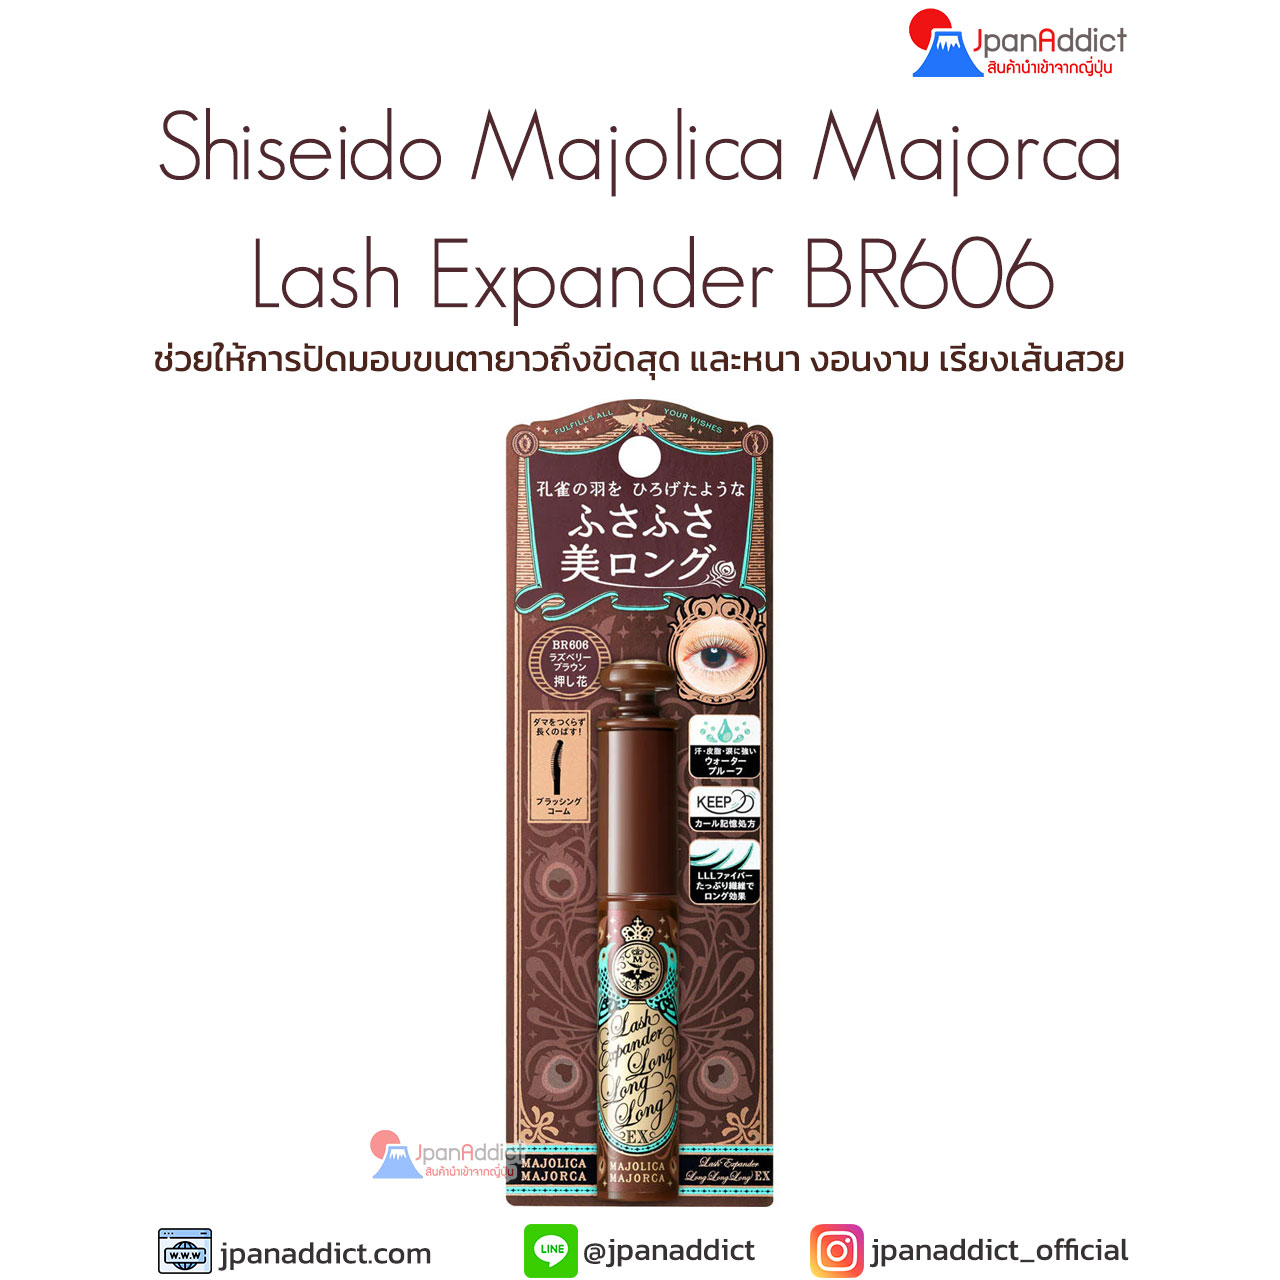 Shiseido Majolica Majorca Lash Expander Long Long Long EX BR606